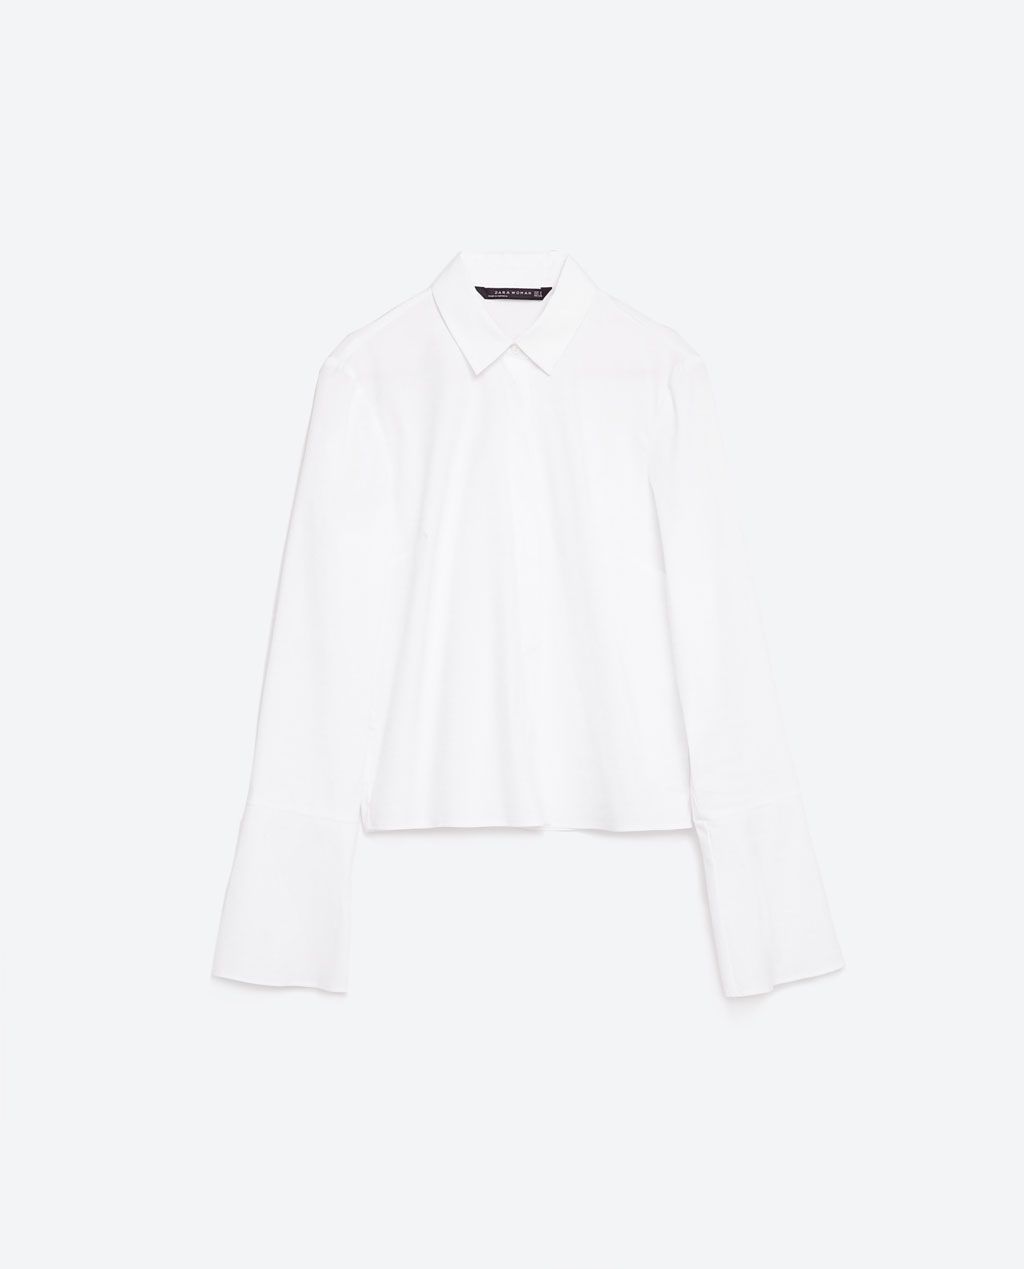 Blusa popelín básica de Zara (29,95€)